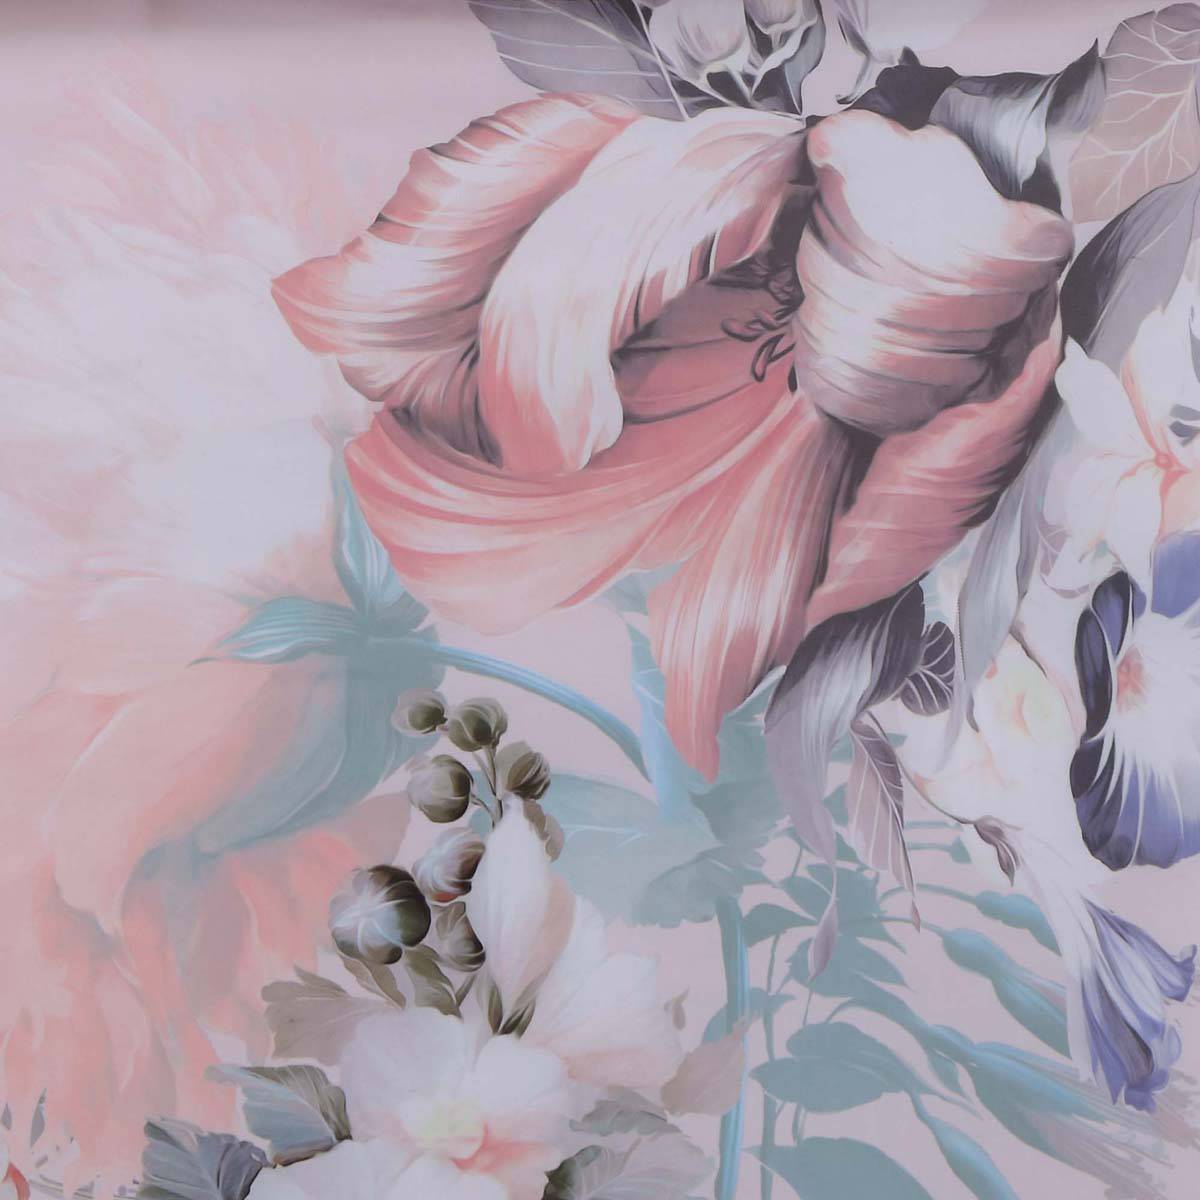 Christian Siriano New York(R) Dreamy Floral Duvet Cover Set